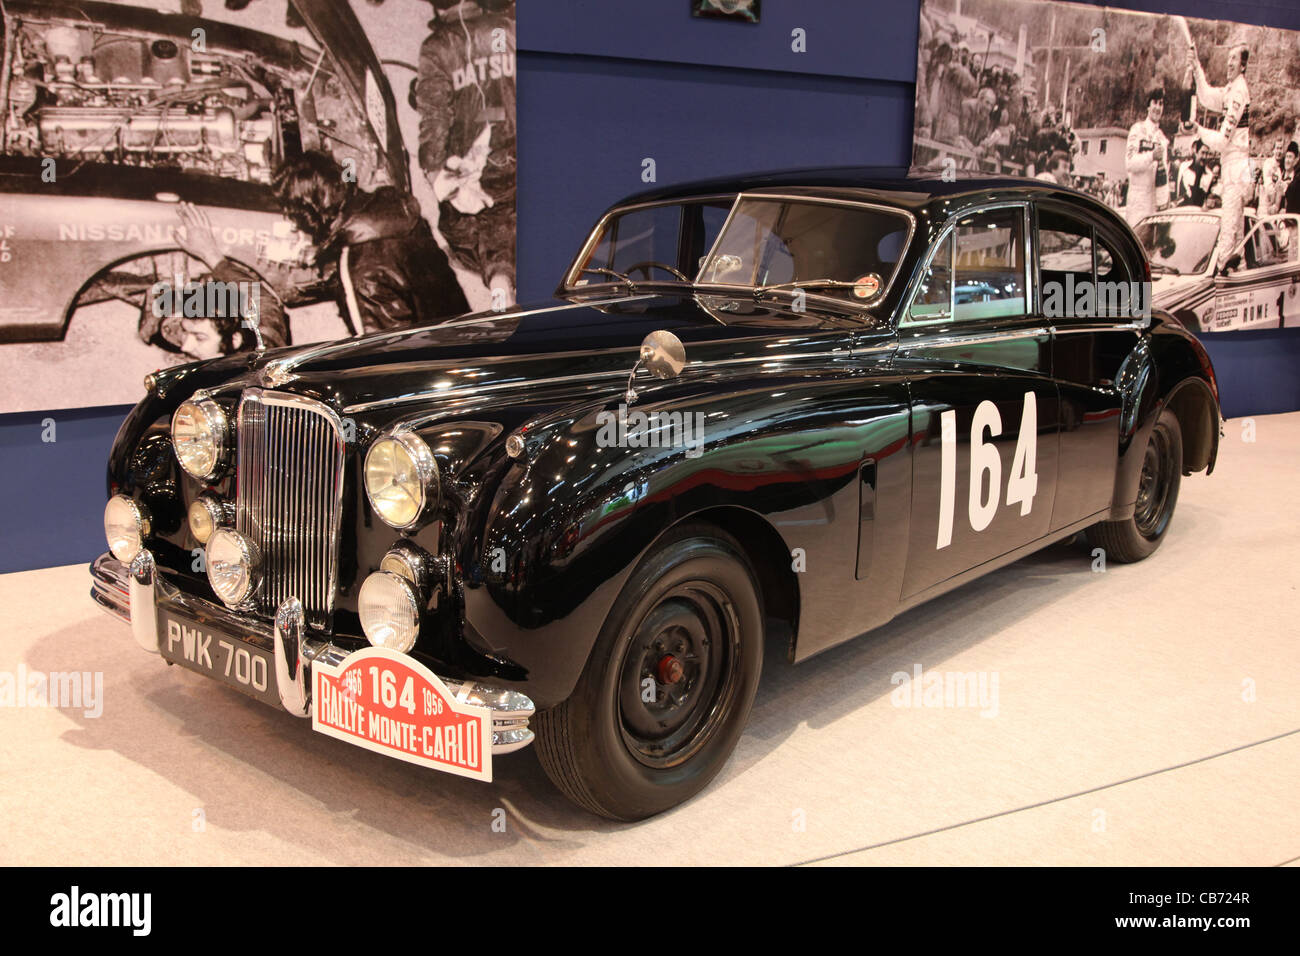 jaguar-mk-vii-winner-car-of-the-rally-monte-carlo-1956-shown-at-the-CB724R.jpg